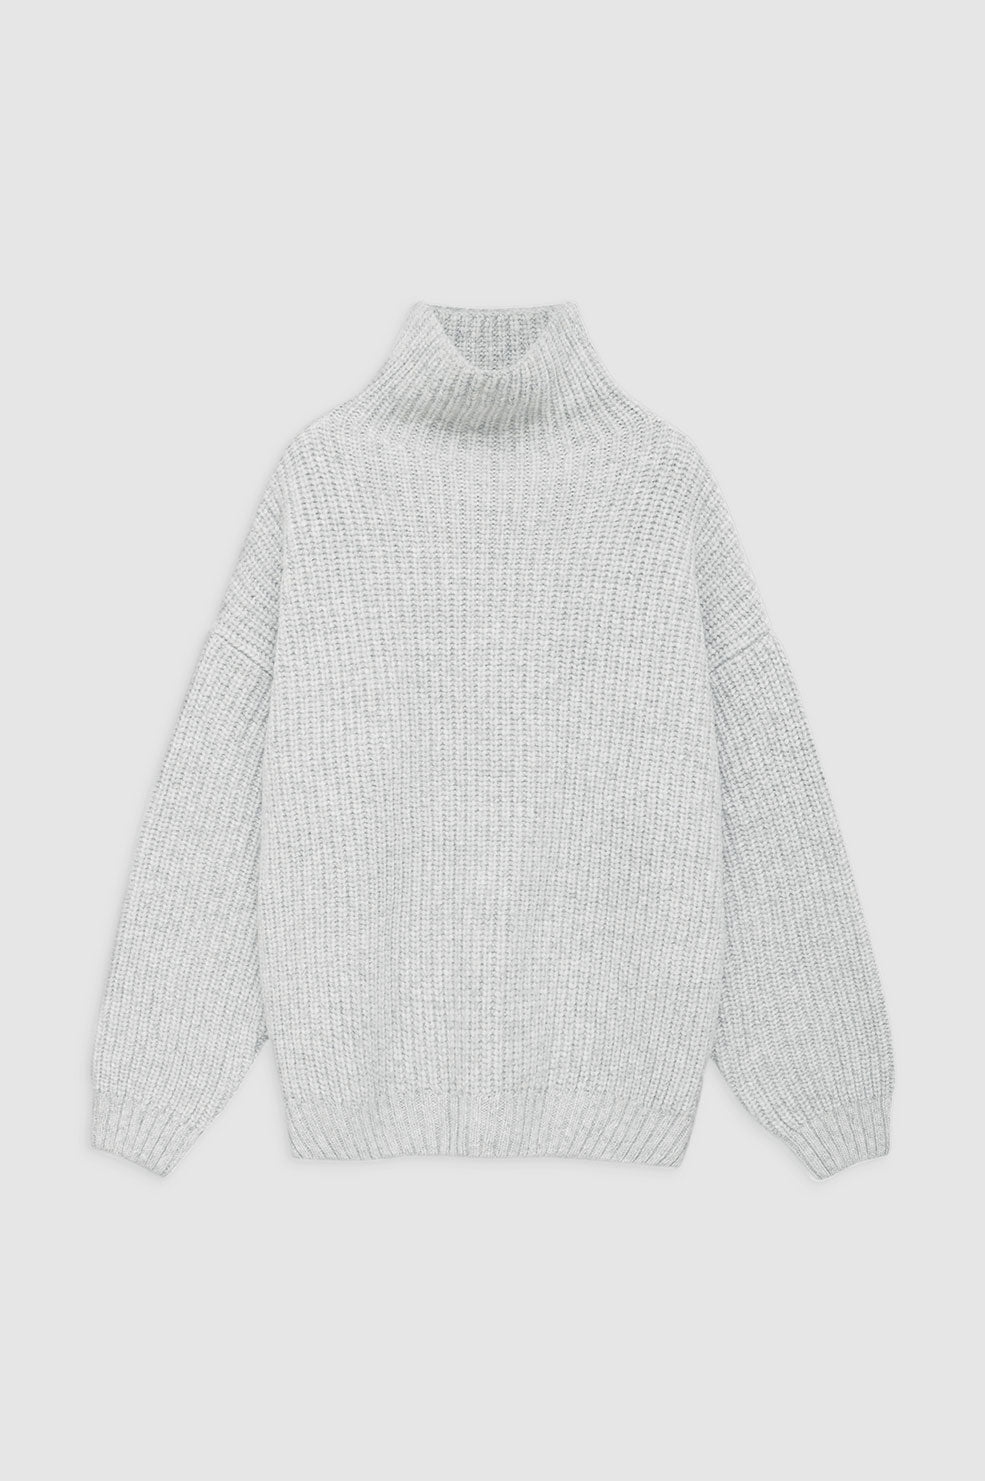 Anine Bing Sydney Sweater- Grey